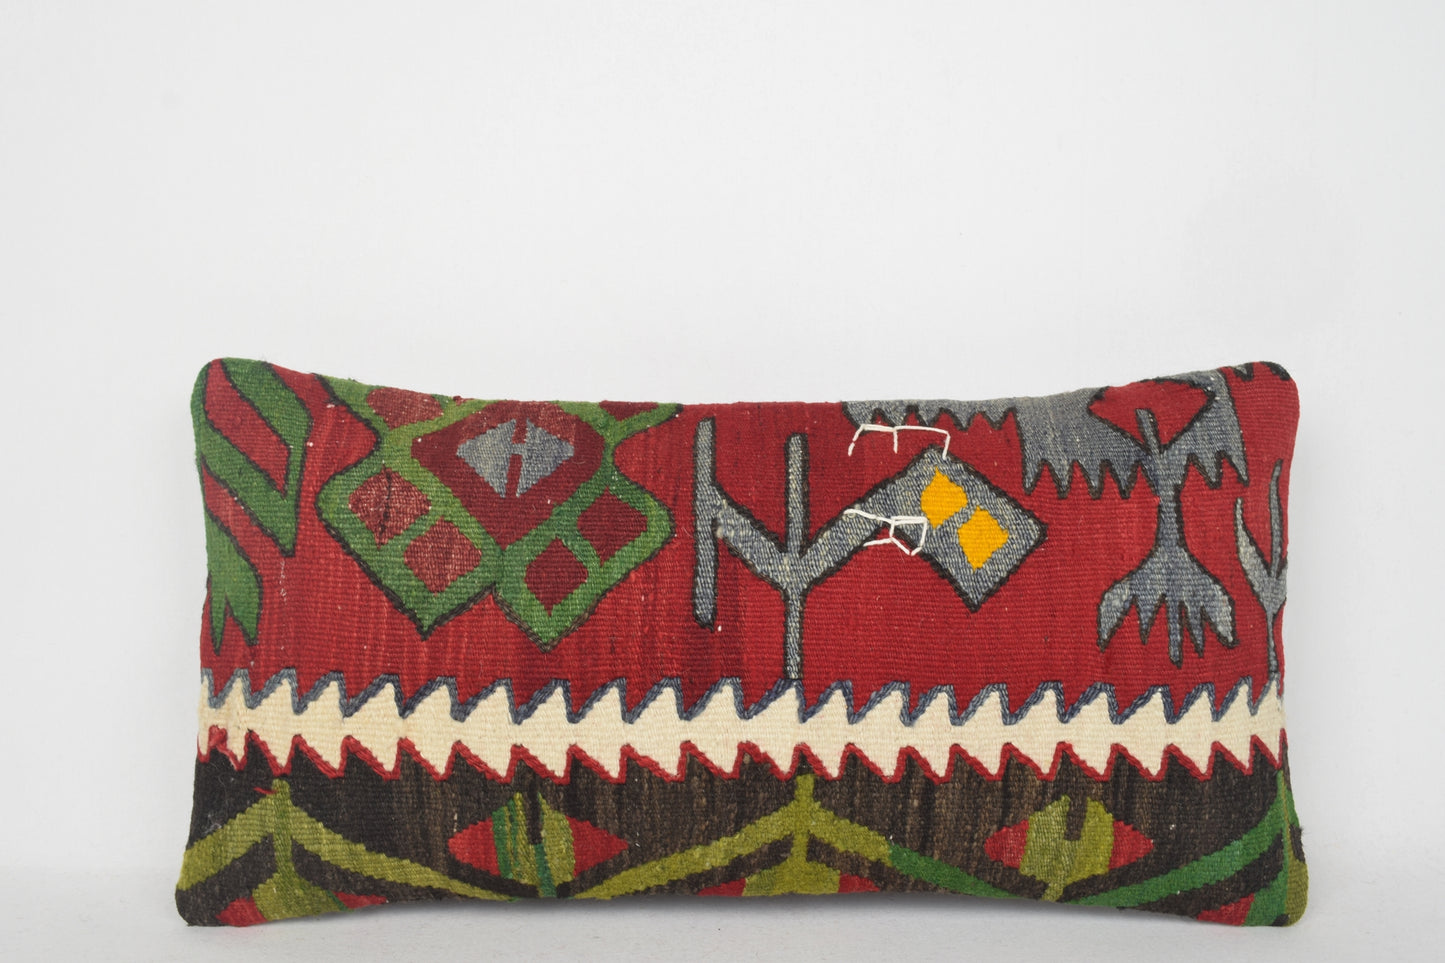 Kilim Cushion Covers Australia, Turkish Rugs Wikipedia Pillow F00127 12x24 " - 30x60 cm.